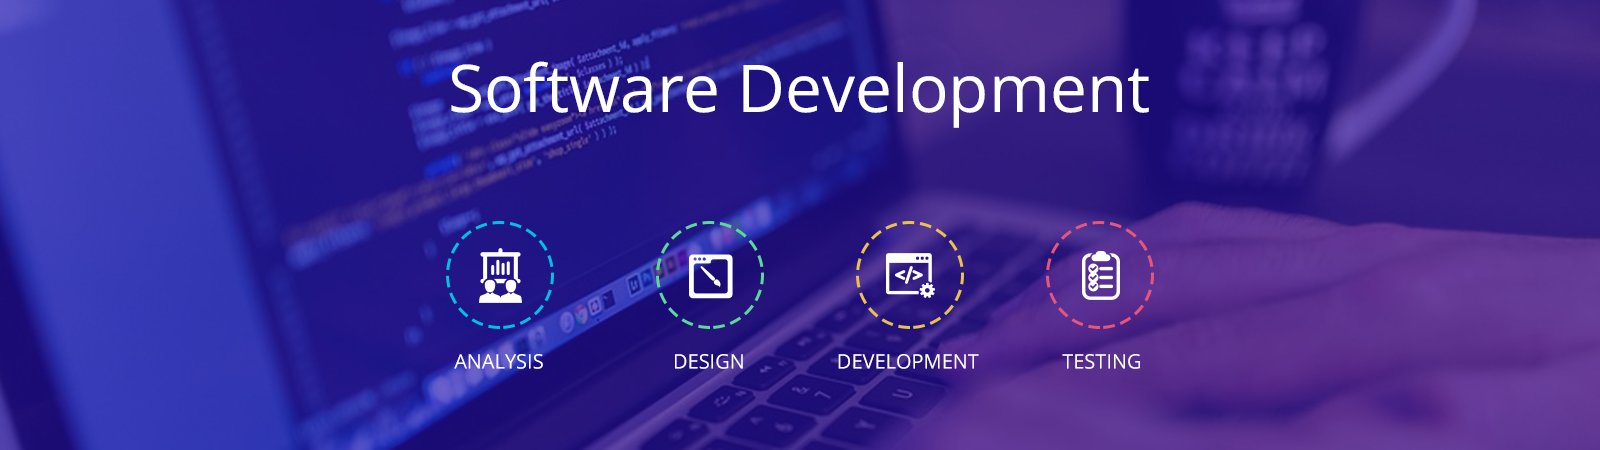 Software-Development-Case-Study-Banner